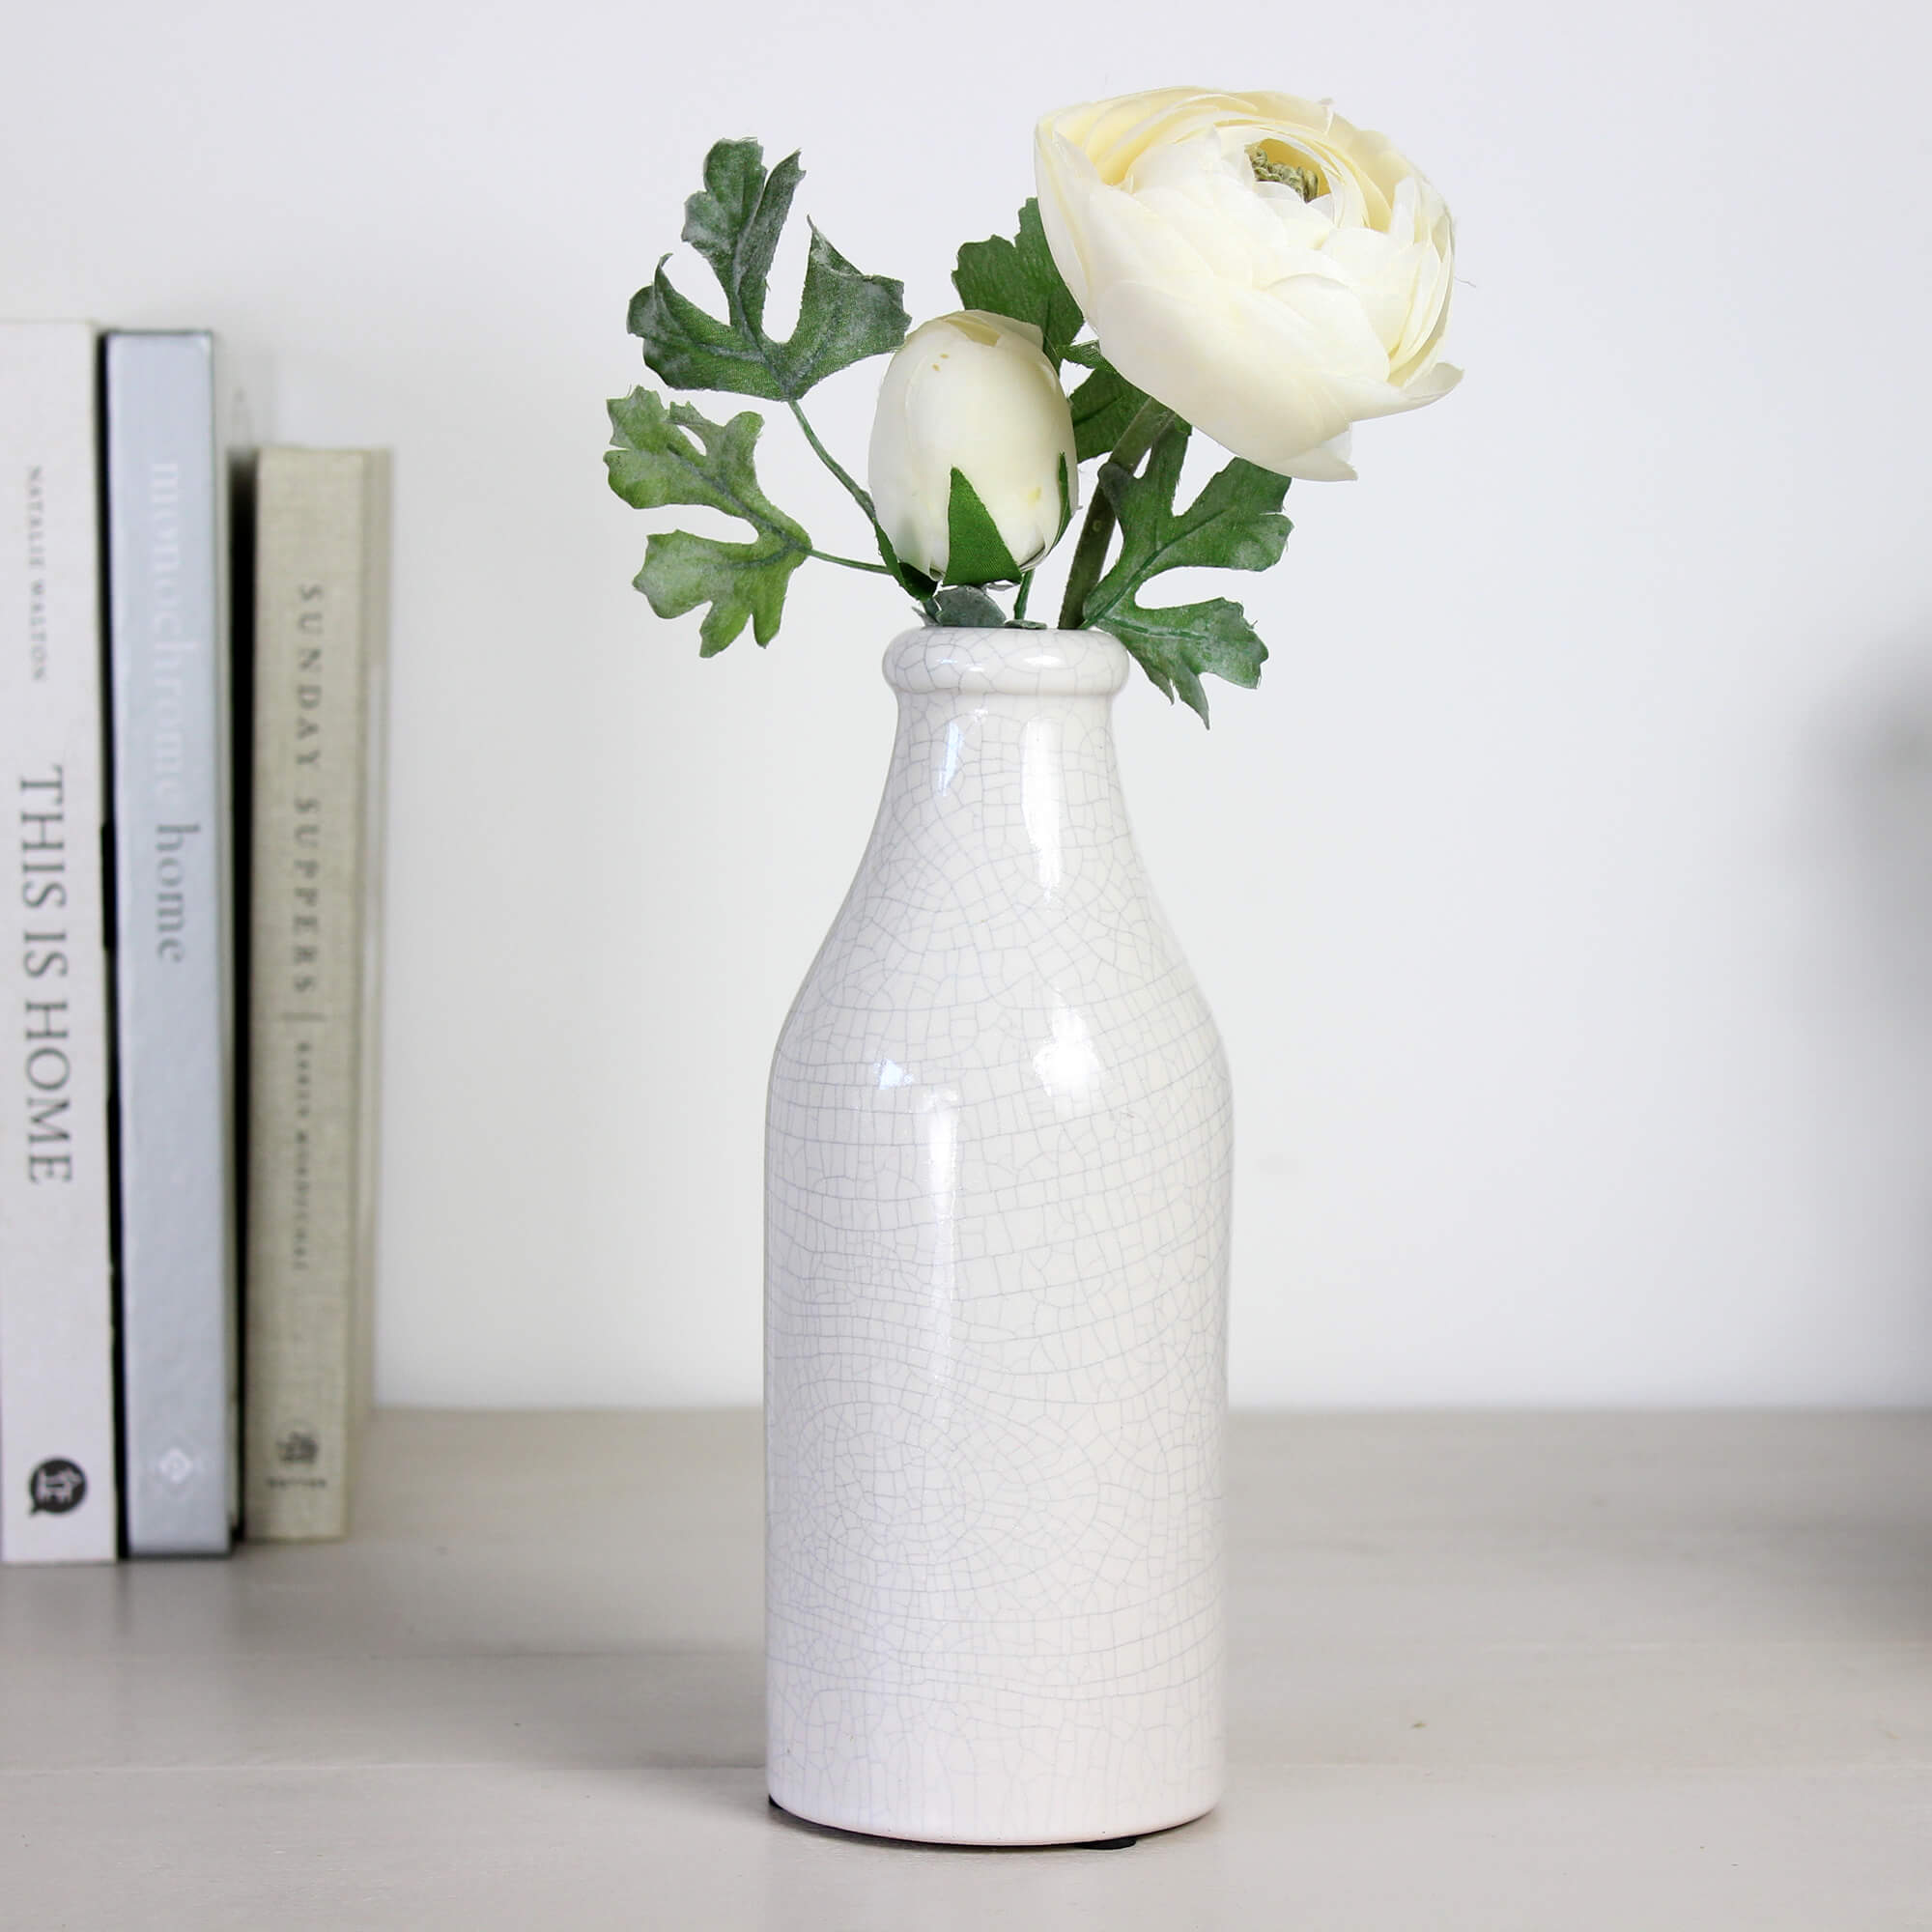 Harpley Cream Crackled Bottle Vase